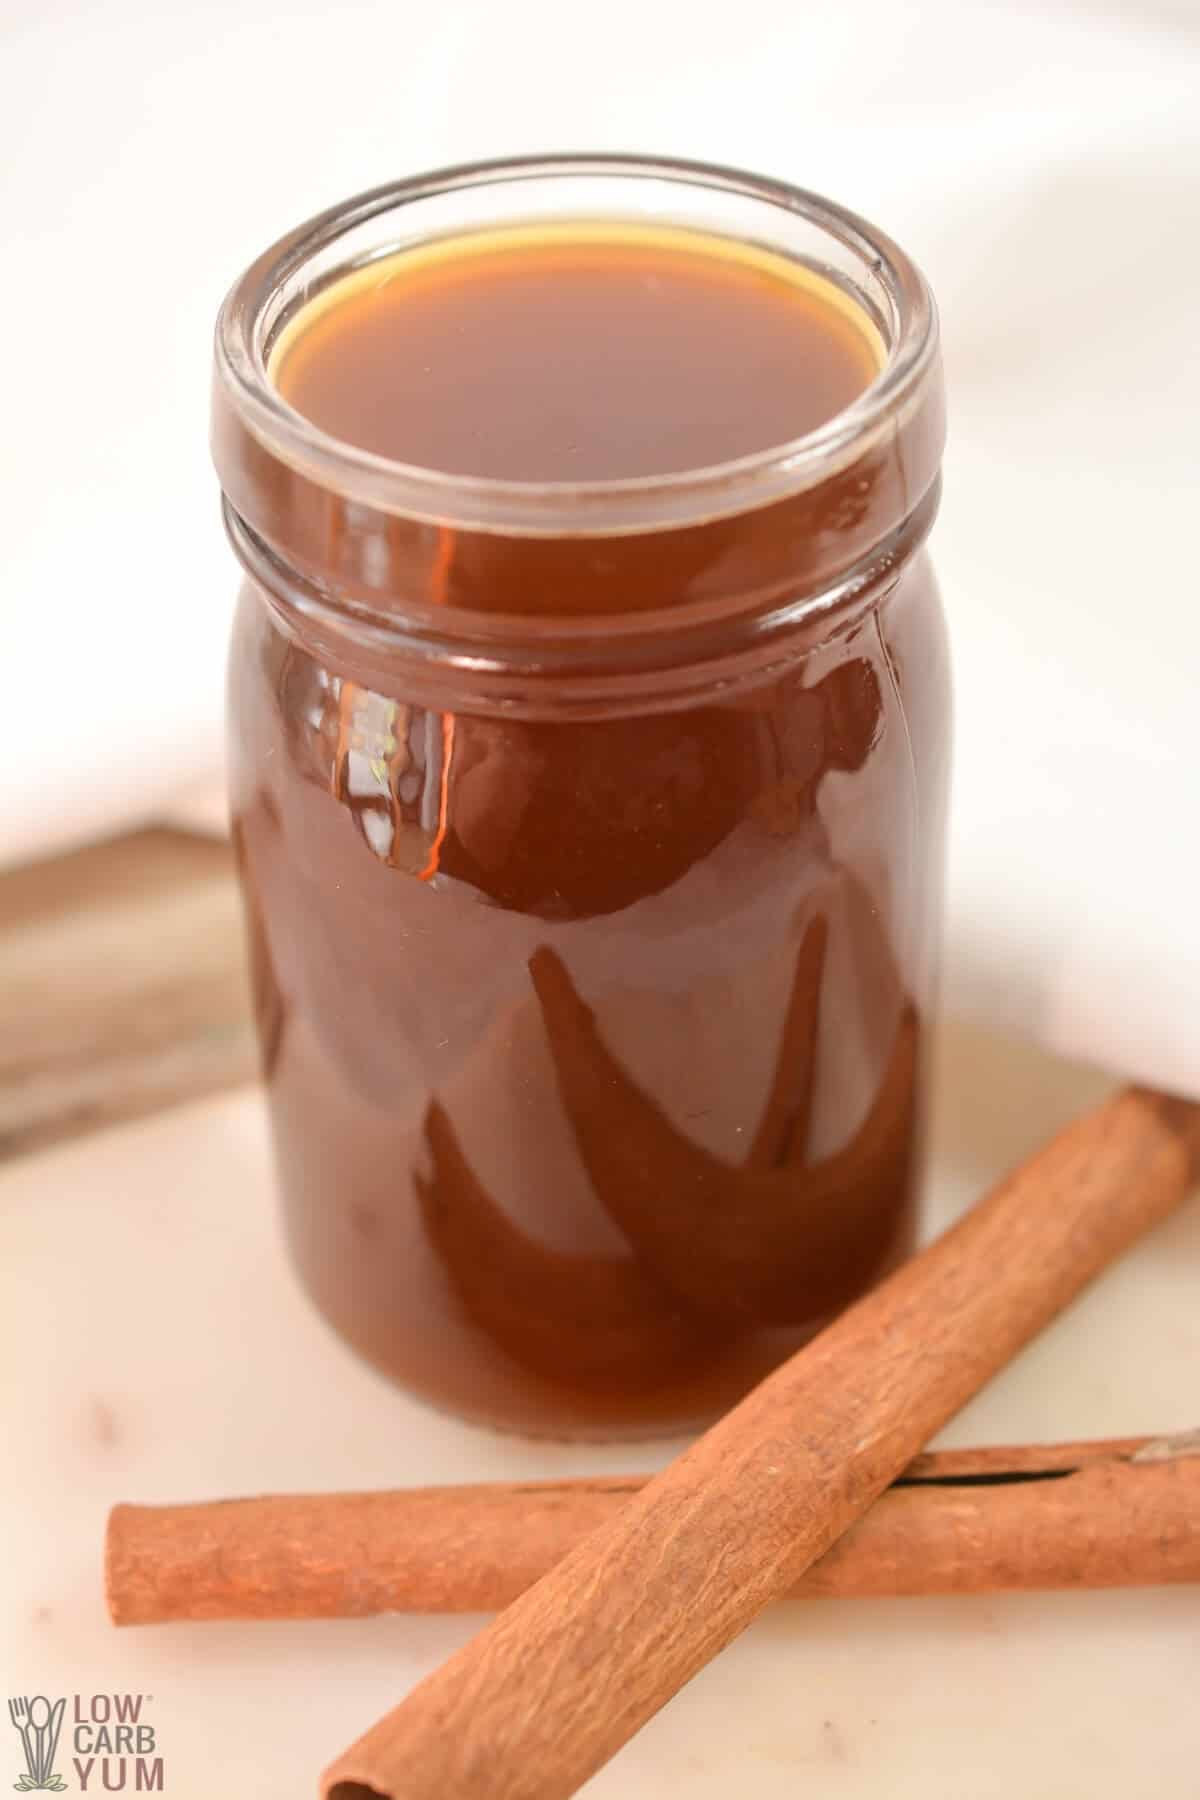 cinnamon dolce syrup in mason jar with cinnamon sticks